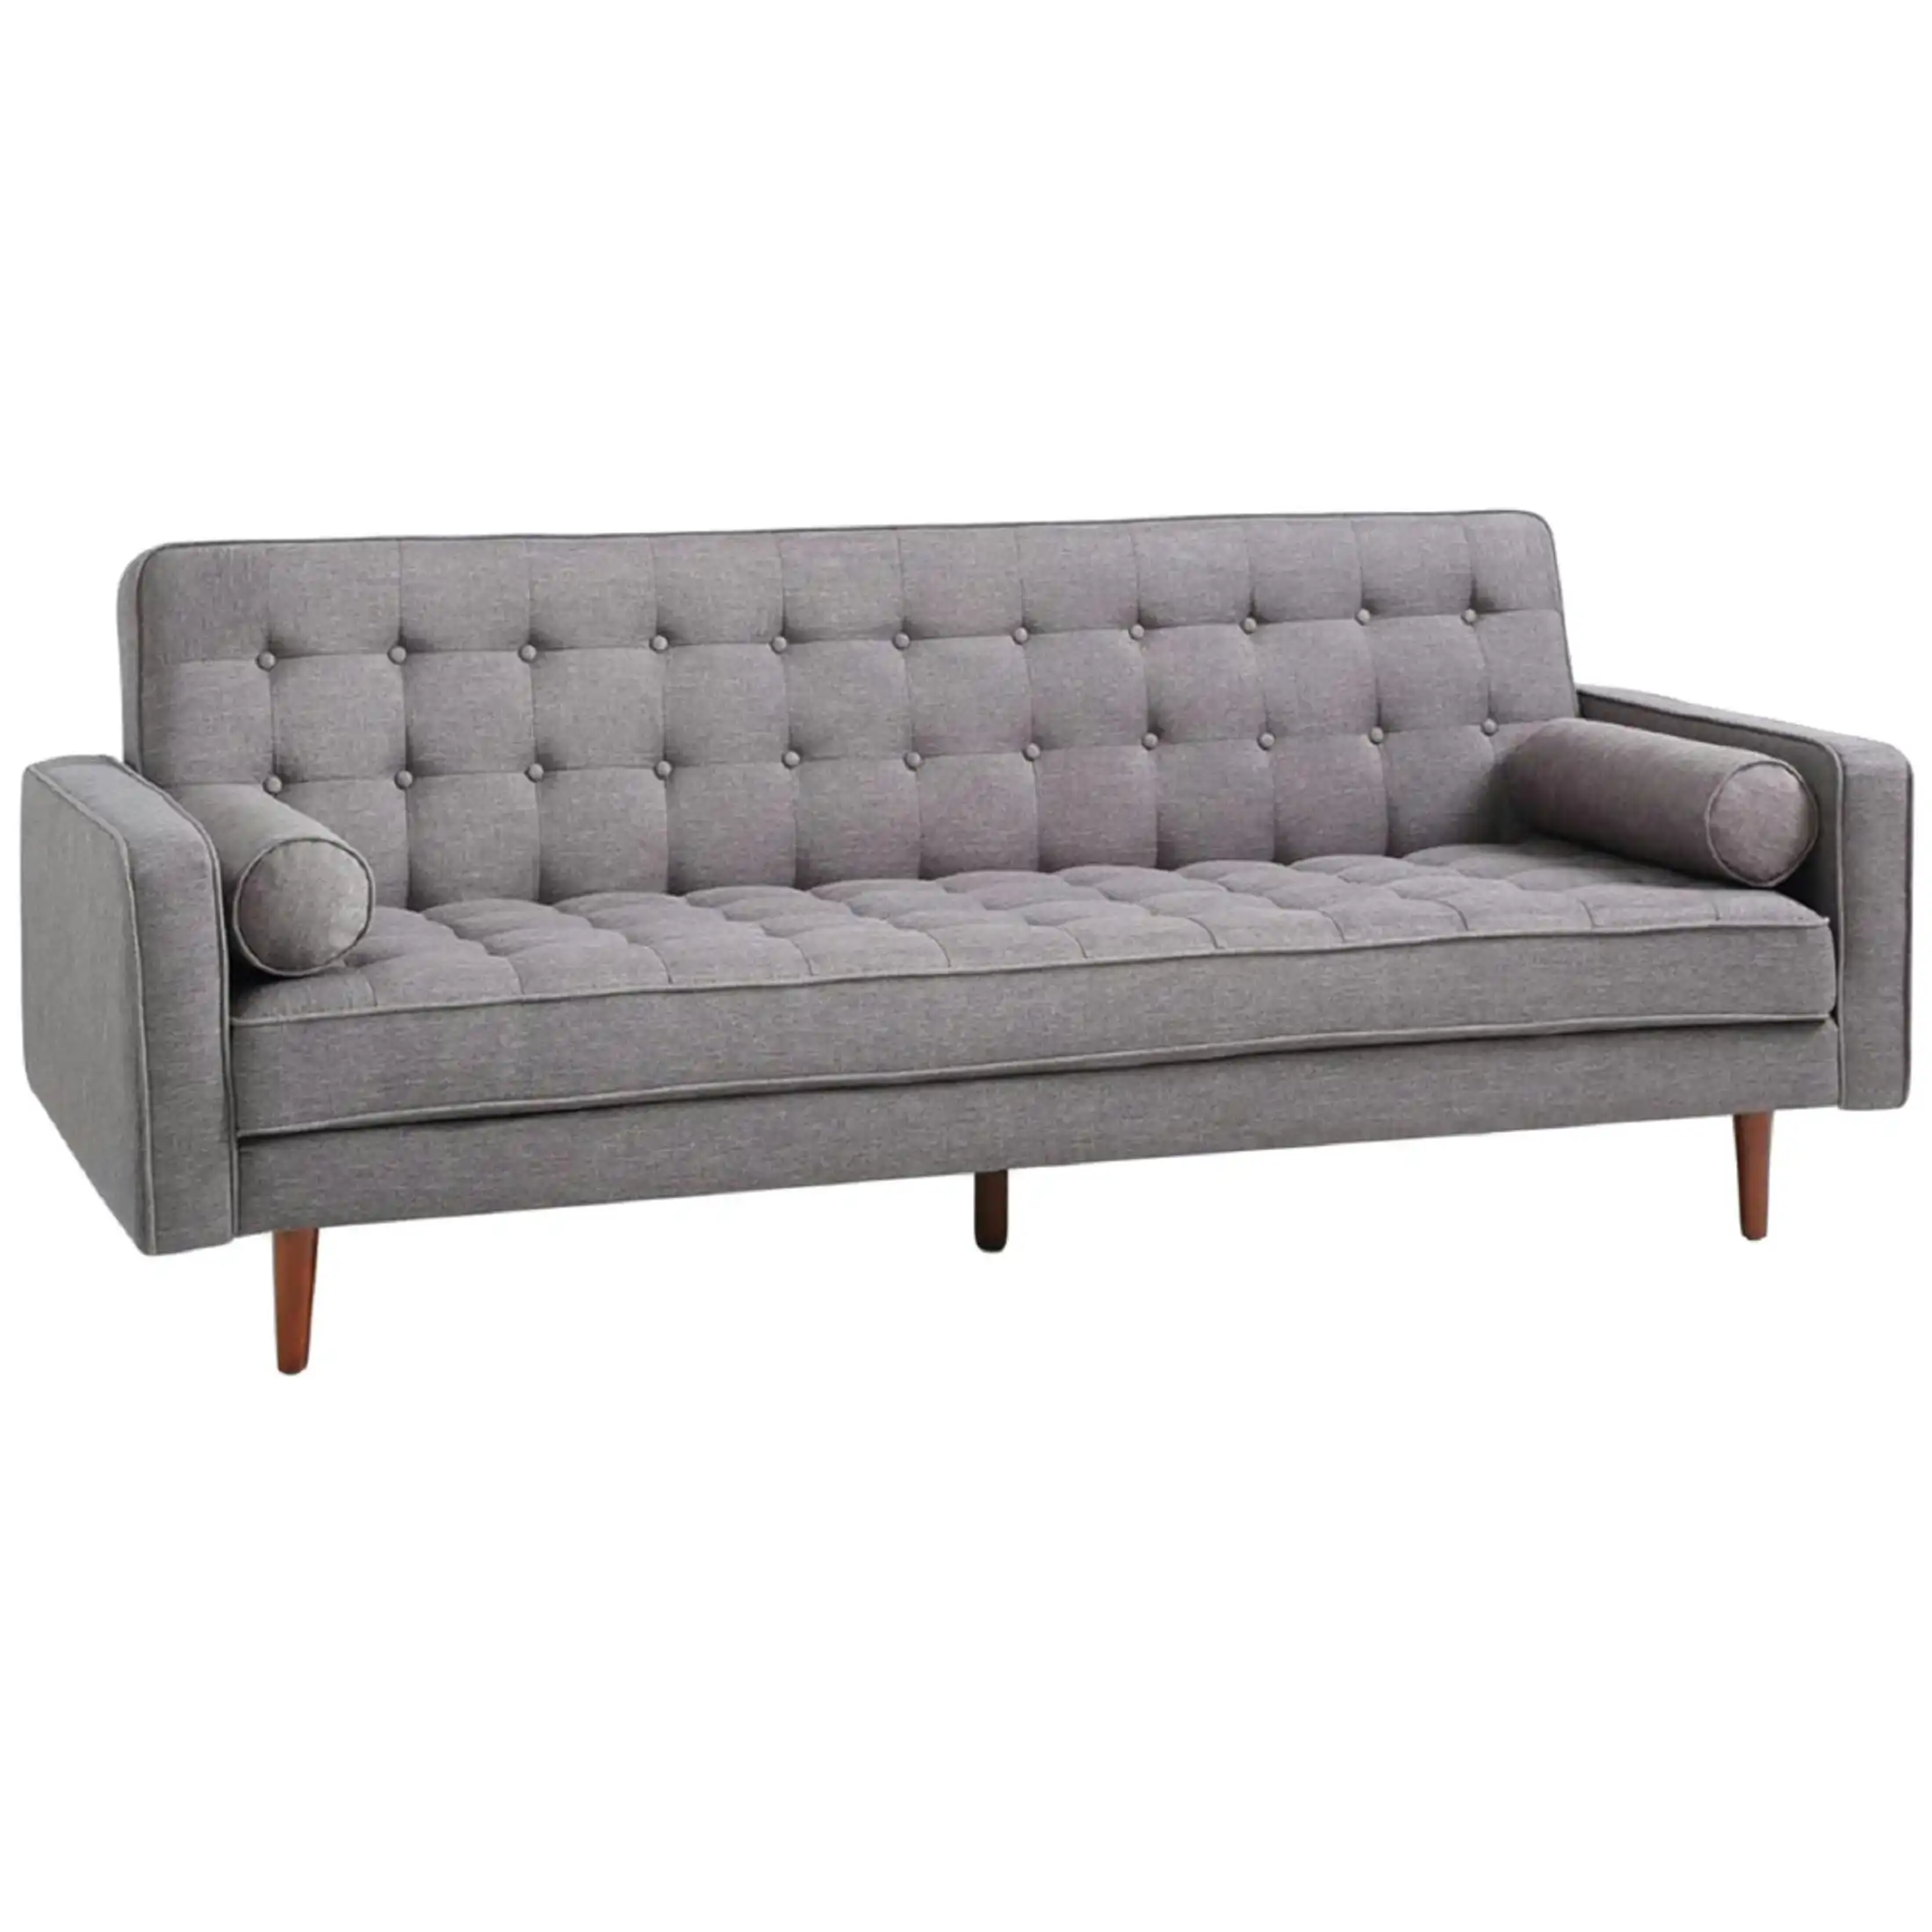 Sofia sofa bed SP068 - Dark Grey BL202